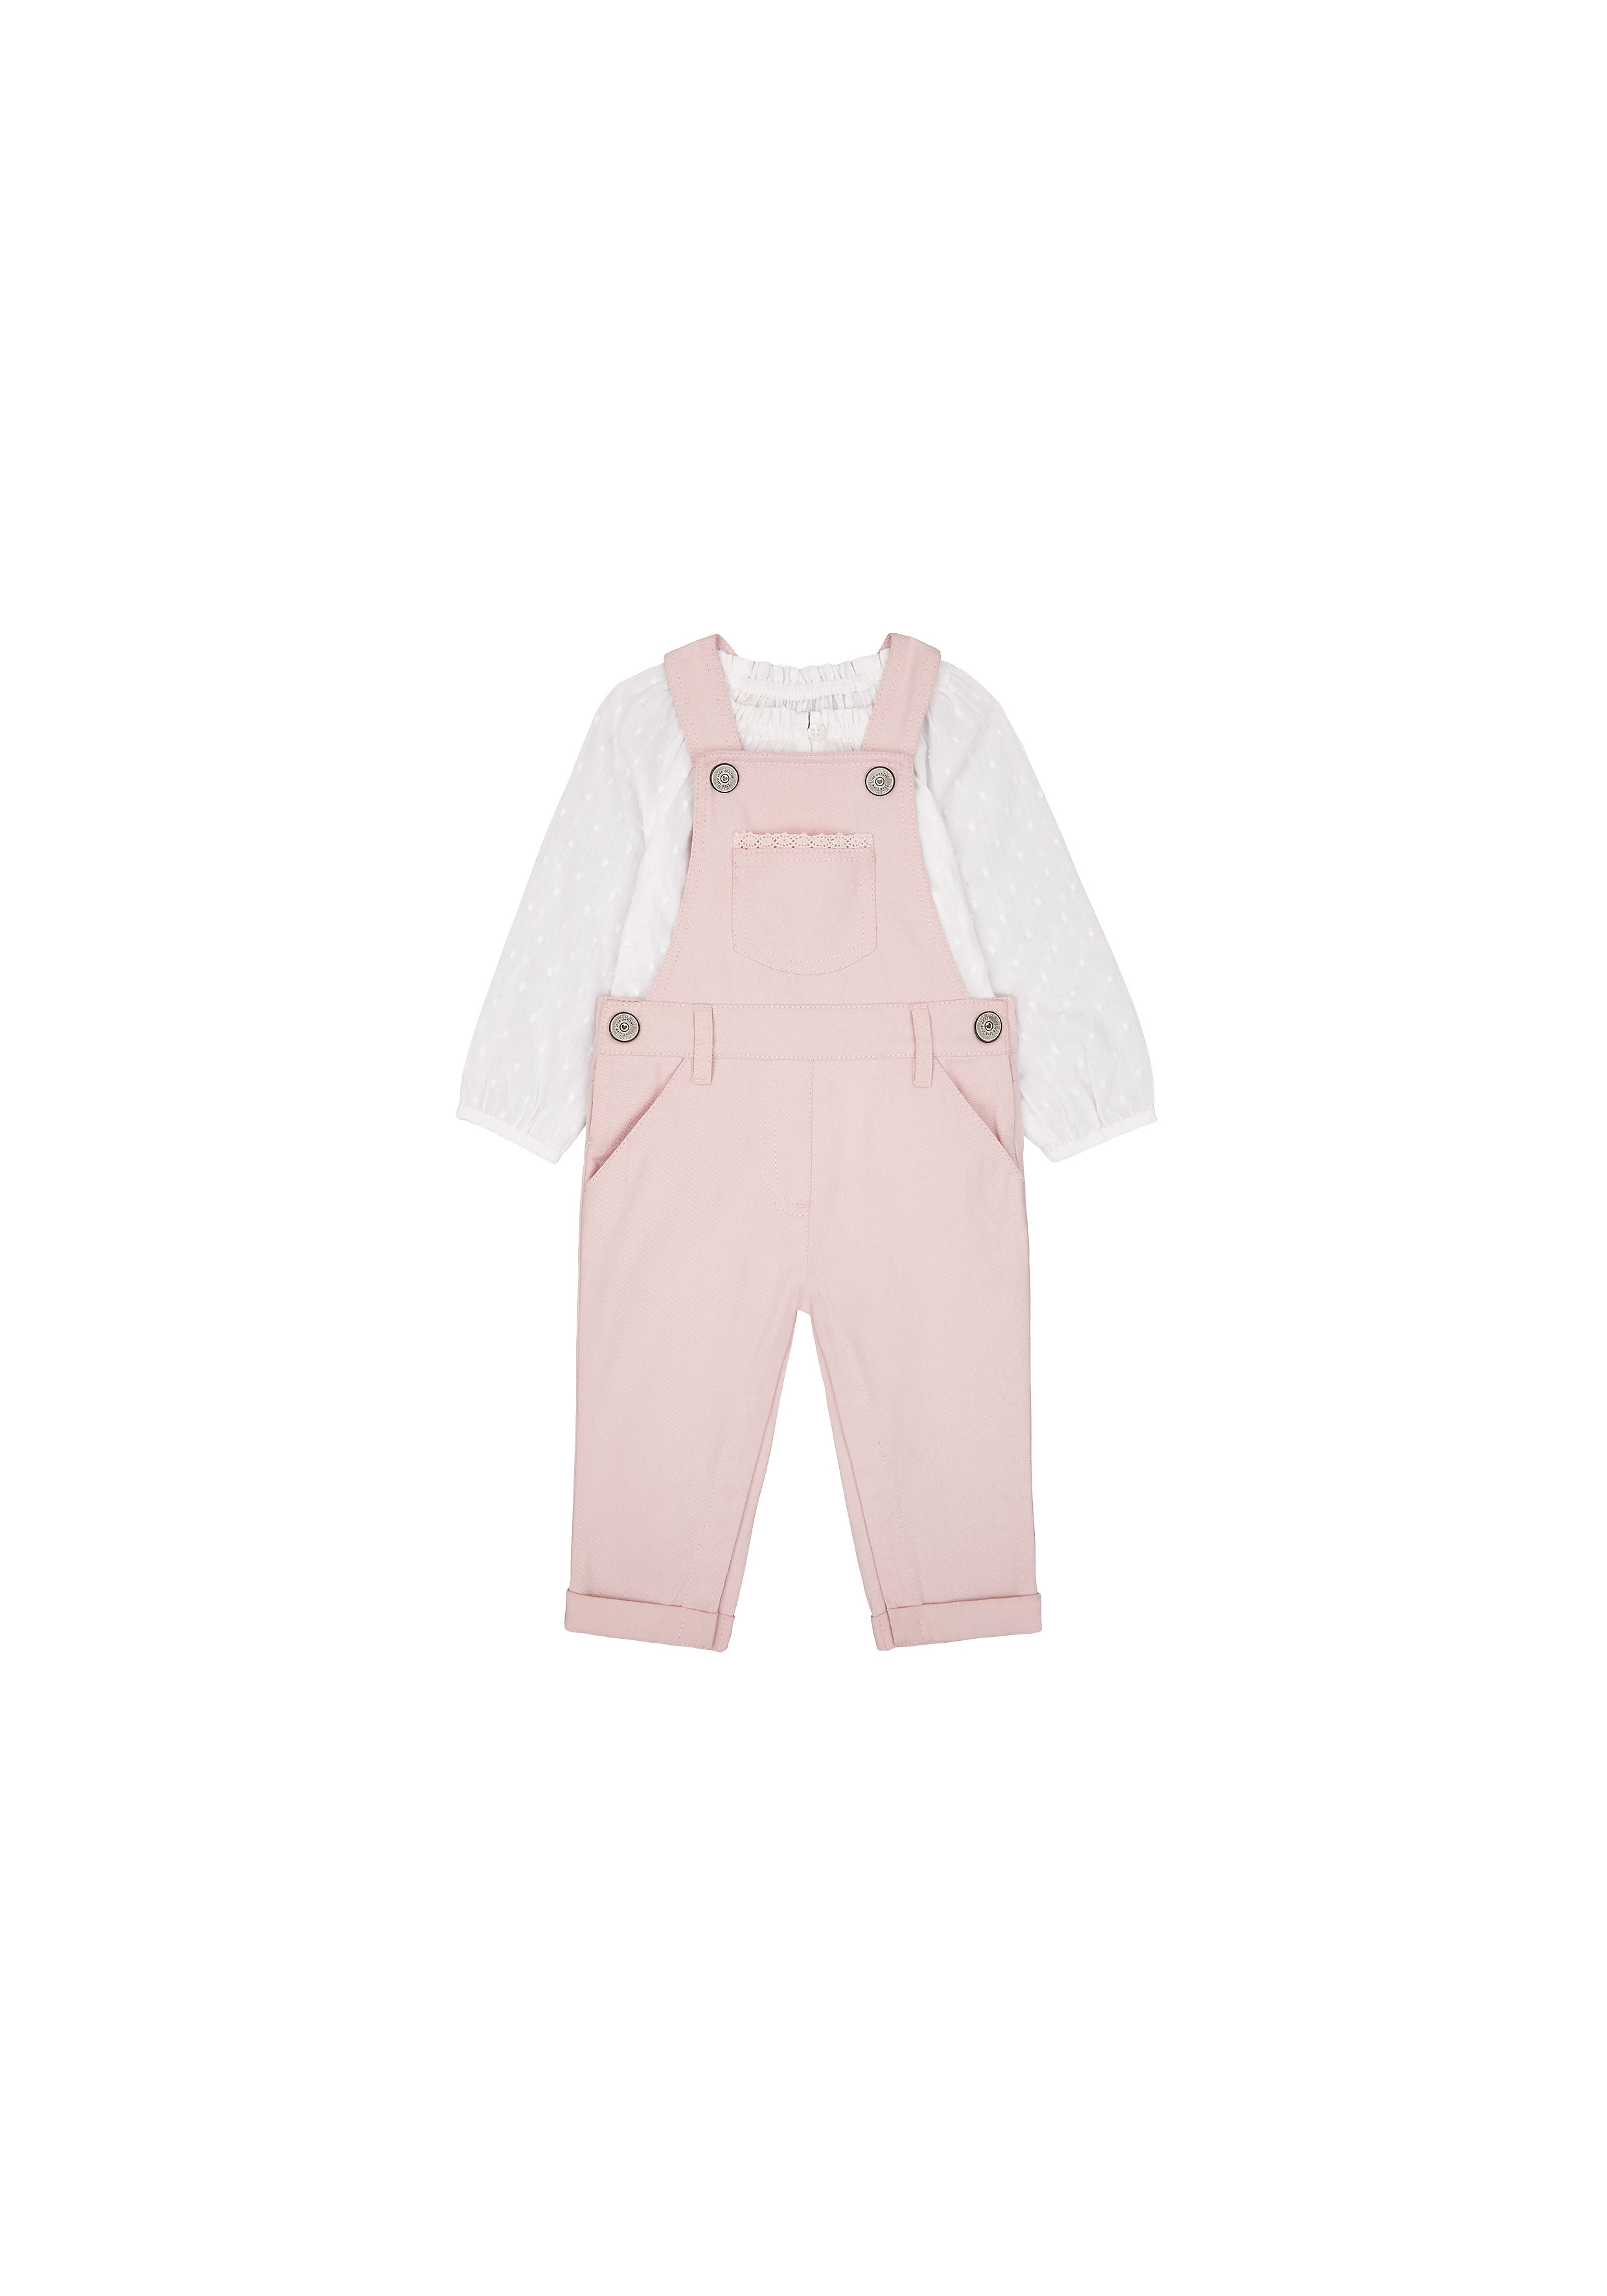 Mothercare | Girls Full Sleeves Dungaree Set Lace Detail - Pink White